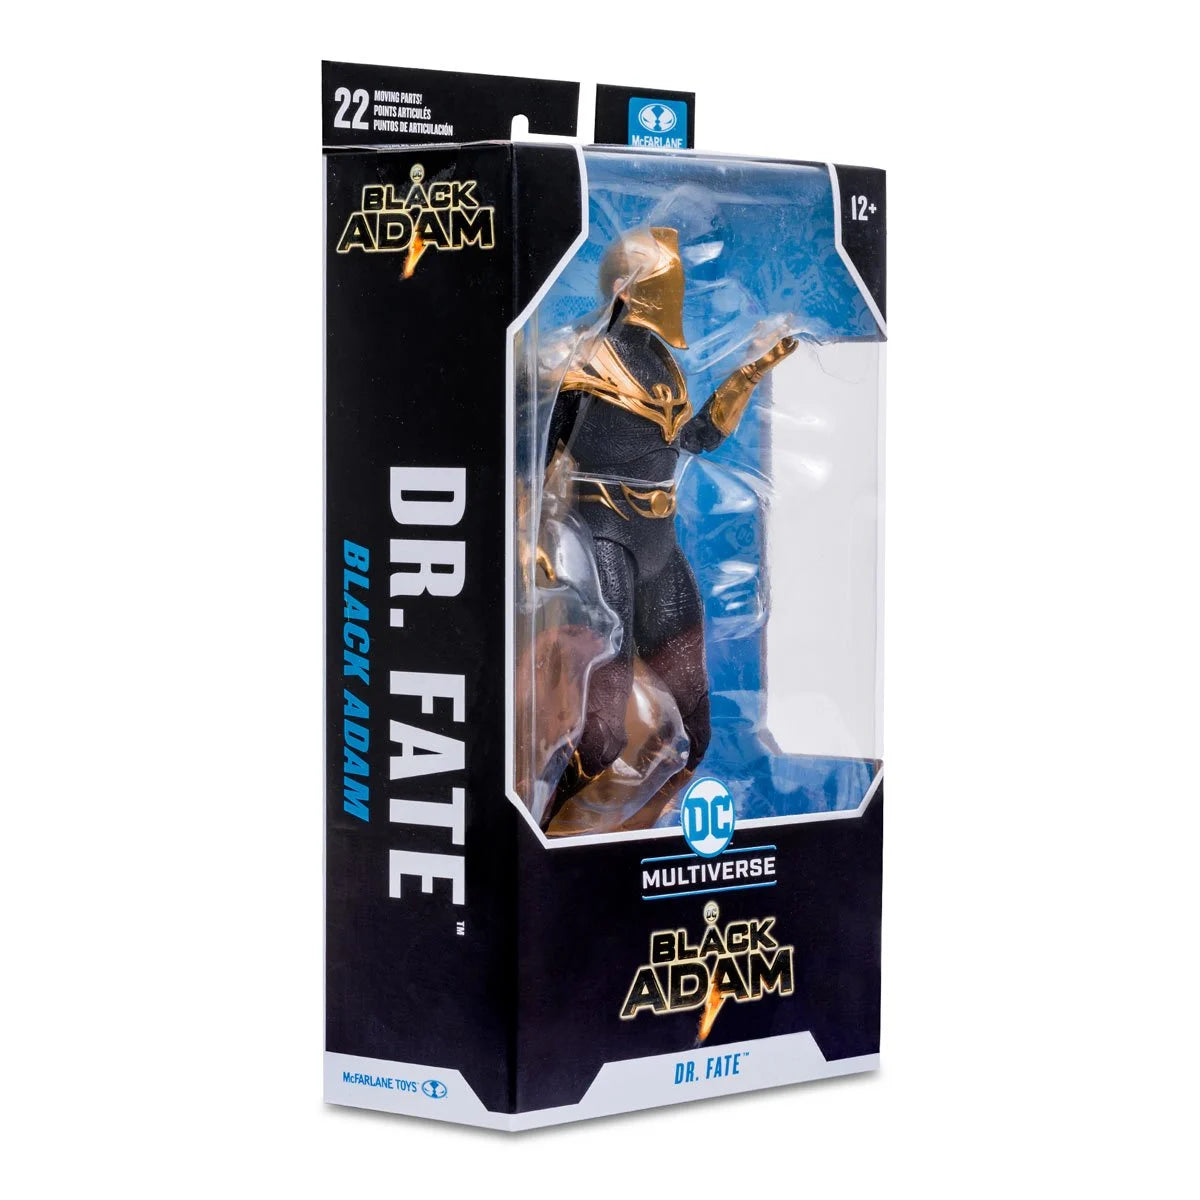 Black Adam DC Multiverse Dr. Fate Action Figure Hasbro Toys